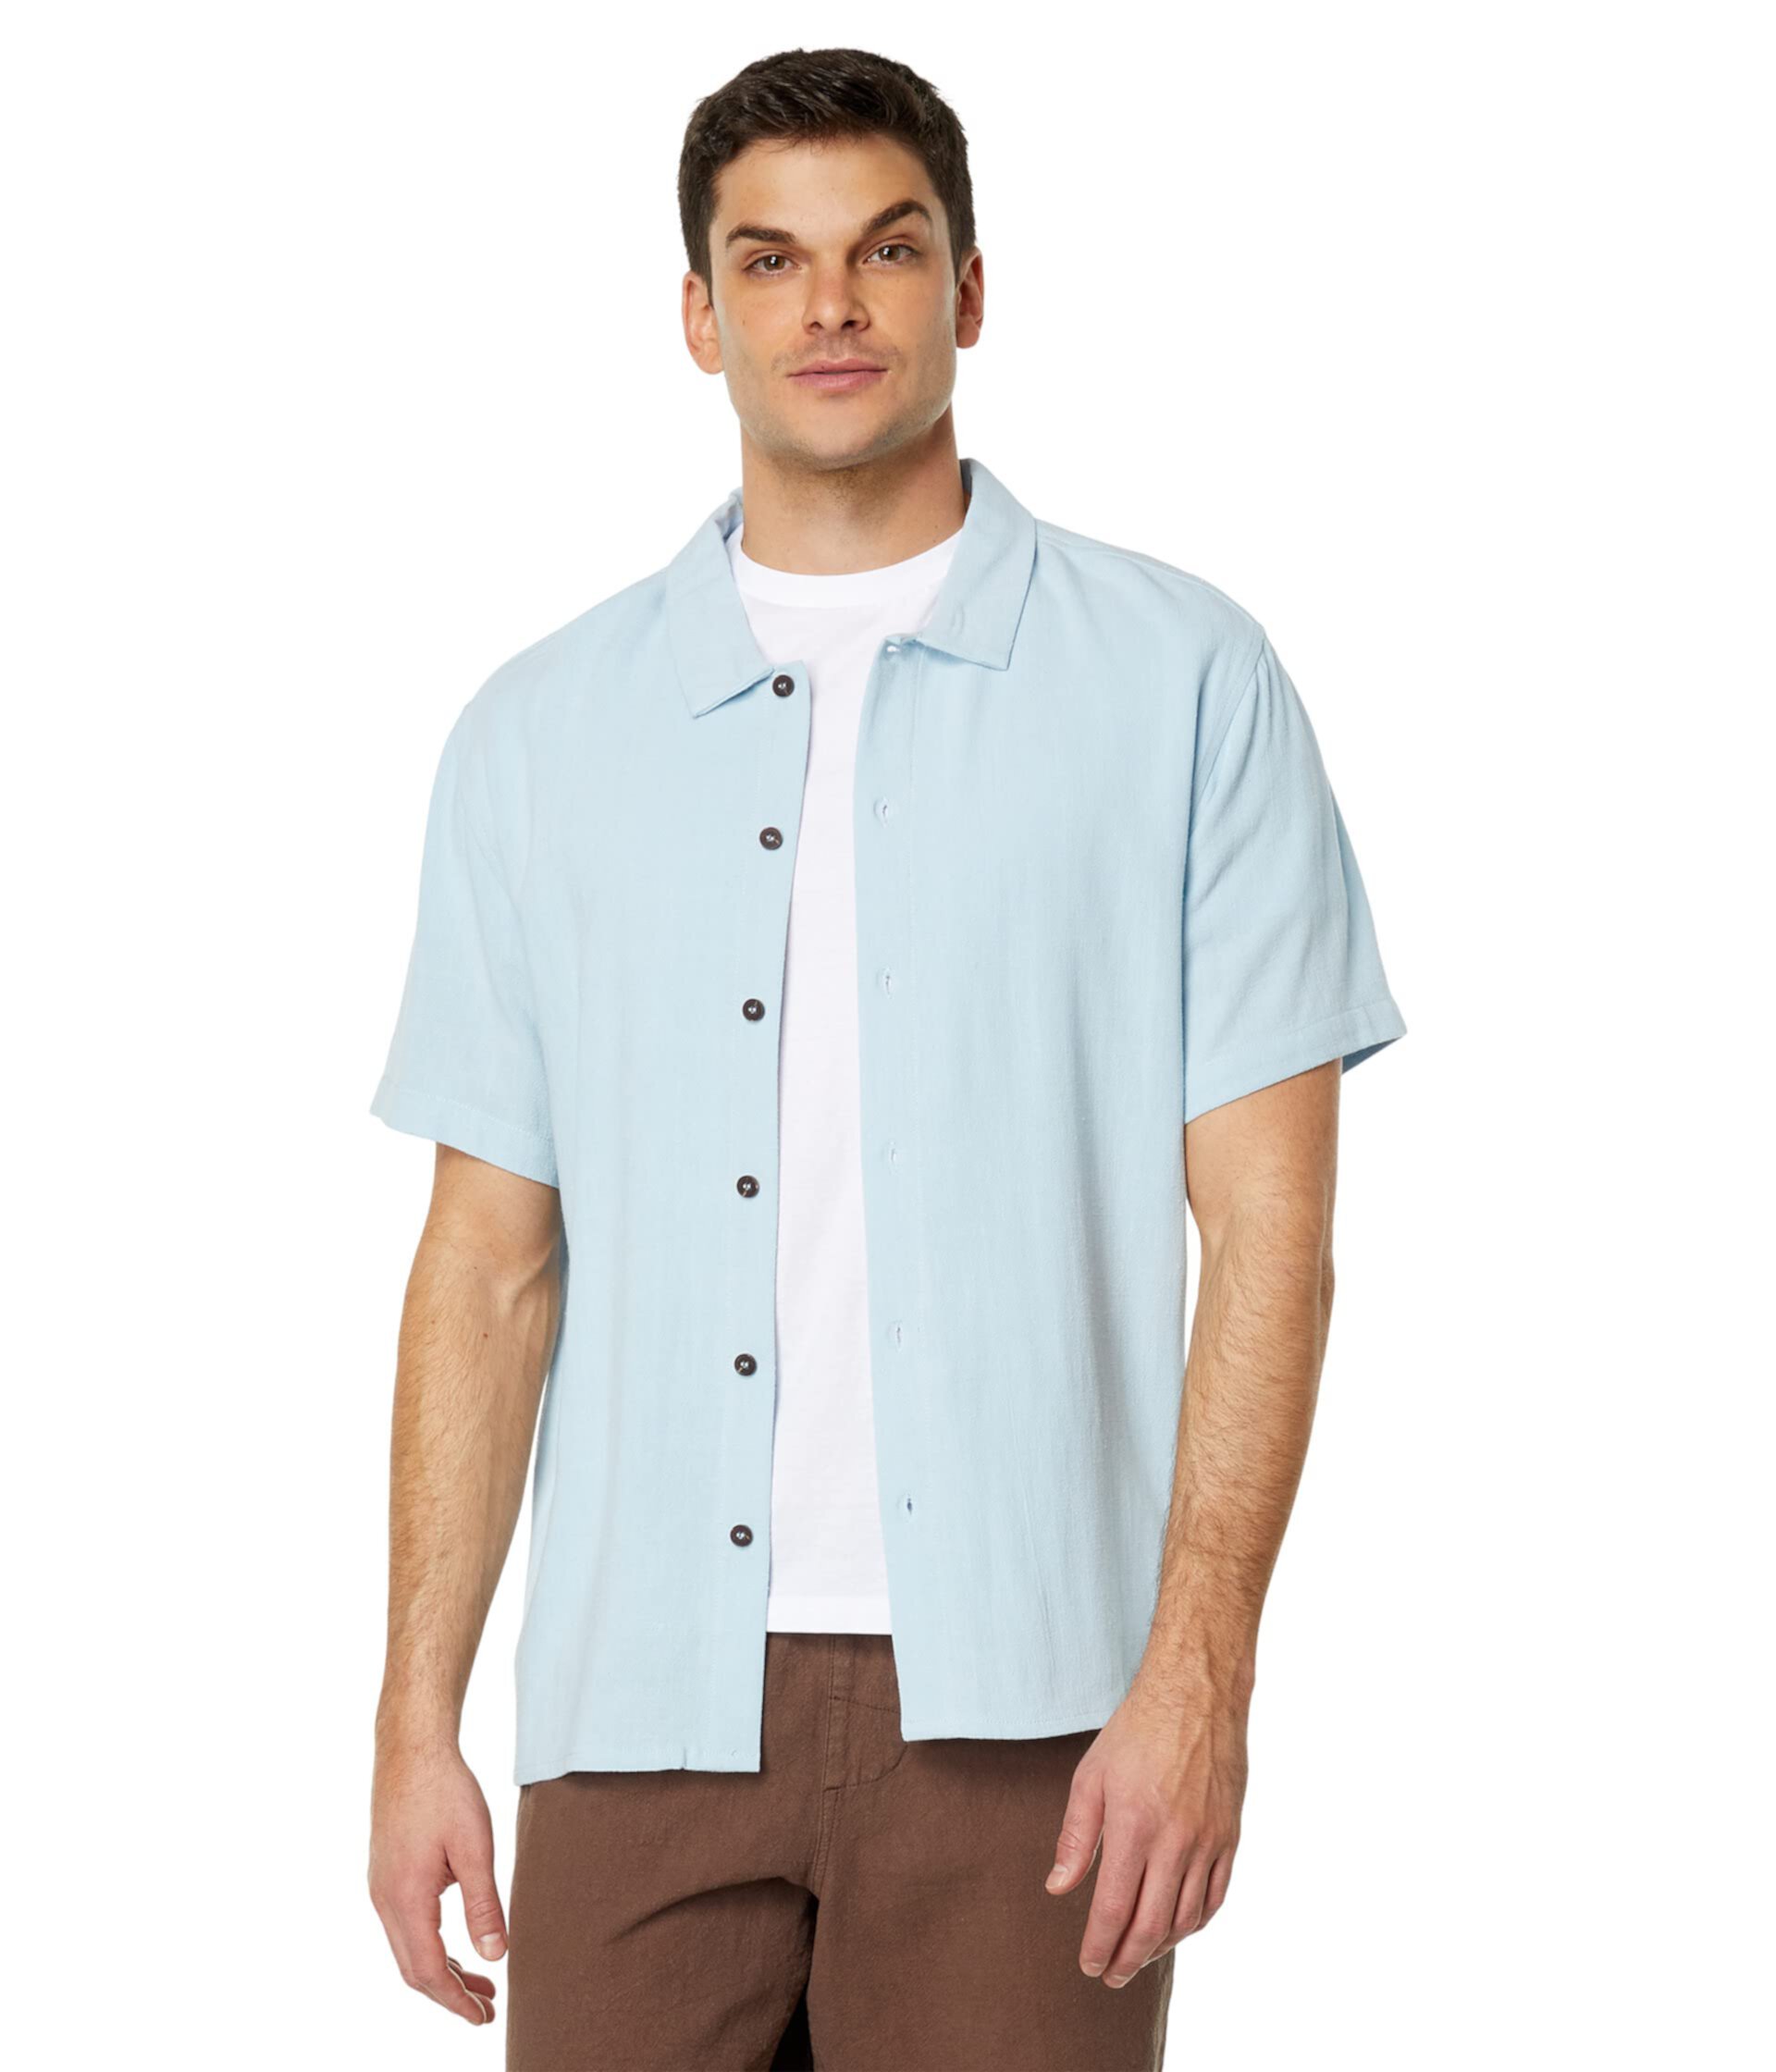 Текстурированная льняная рубашка с коротким рукавом RHYTHM